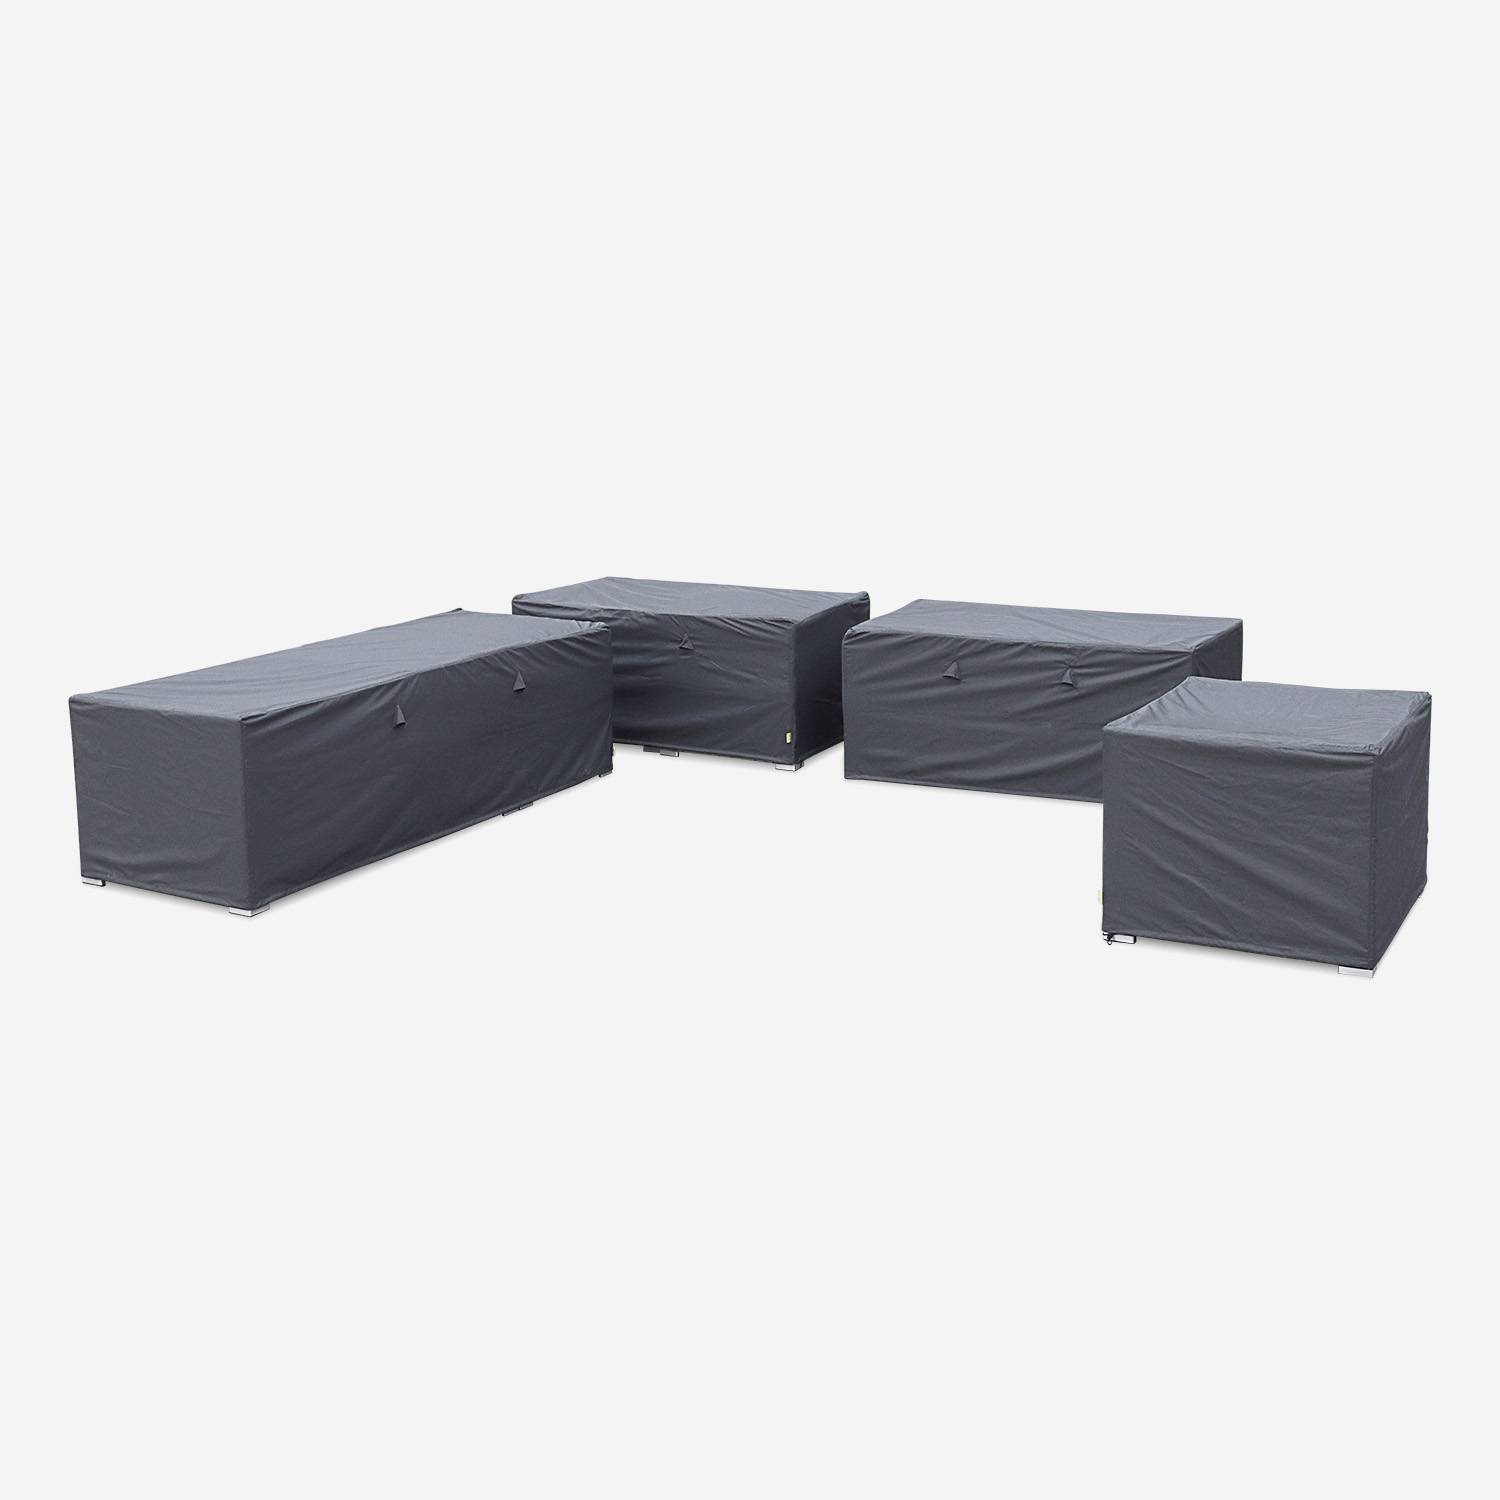 Protective covers for Venezia garden furniture set, dark grey. Water-resistant, polyamide coating Photo1